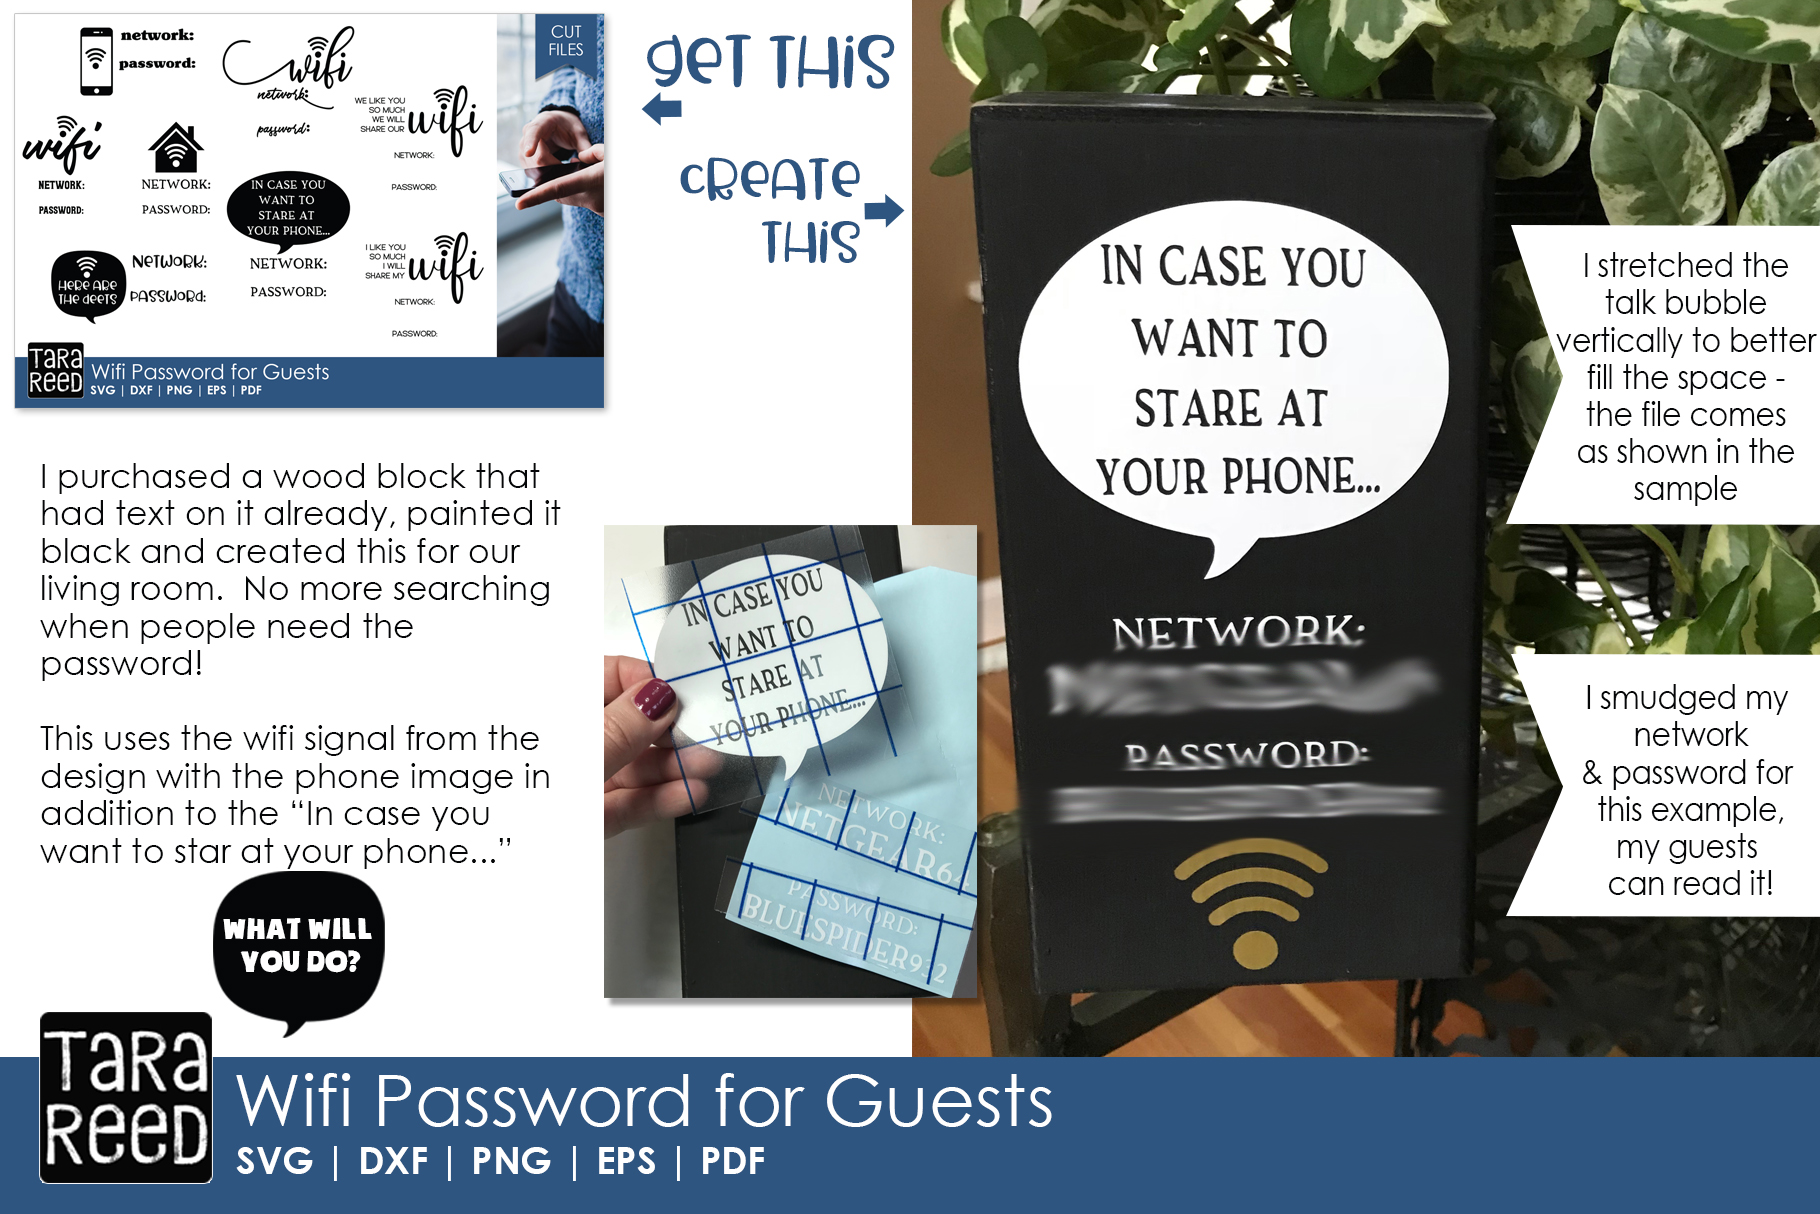 wifi-password-for-guests-129581-cut-files-design-bundles